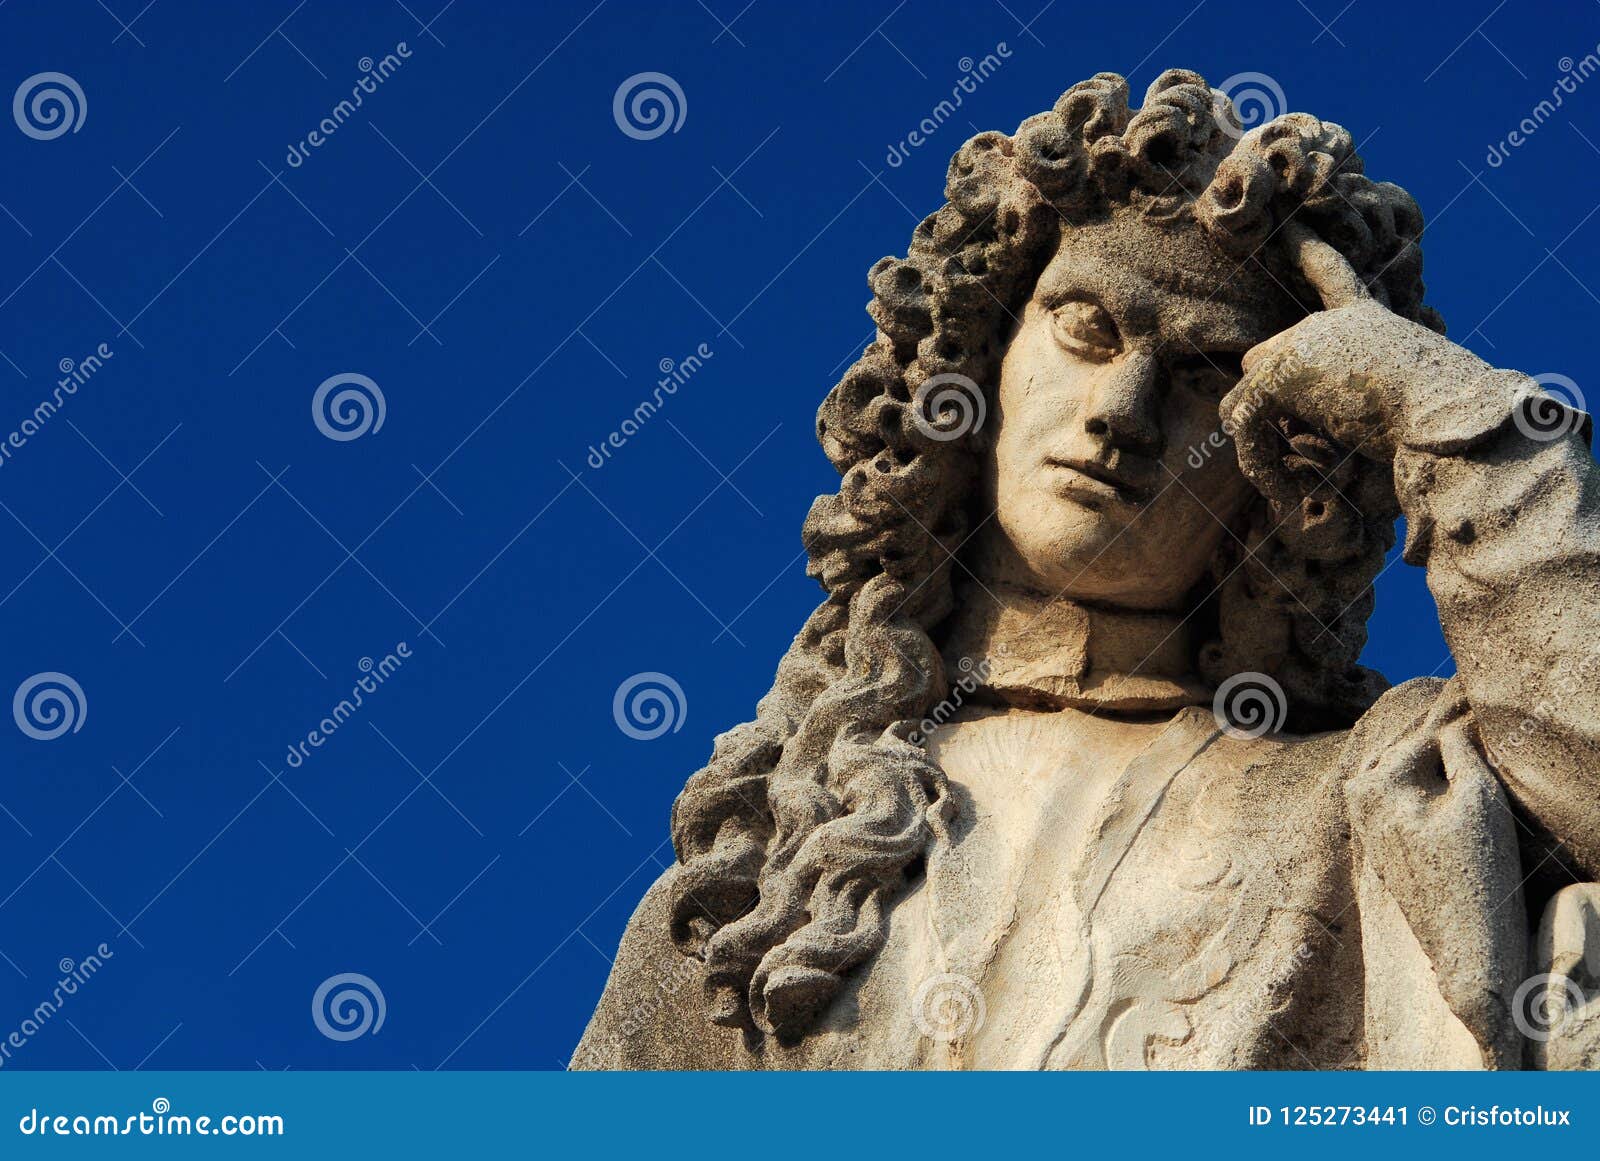 https://thumbs.dreamstime.com/z/thinking-man-statue-act-against-blue-sky-bernardo-nani-monument-erected-th-century-padua-great-venetian-scholar-125273441.jpg